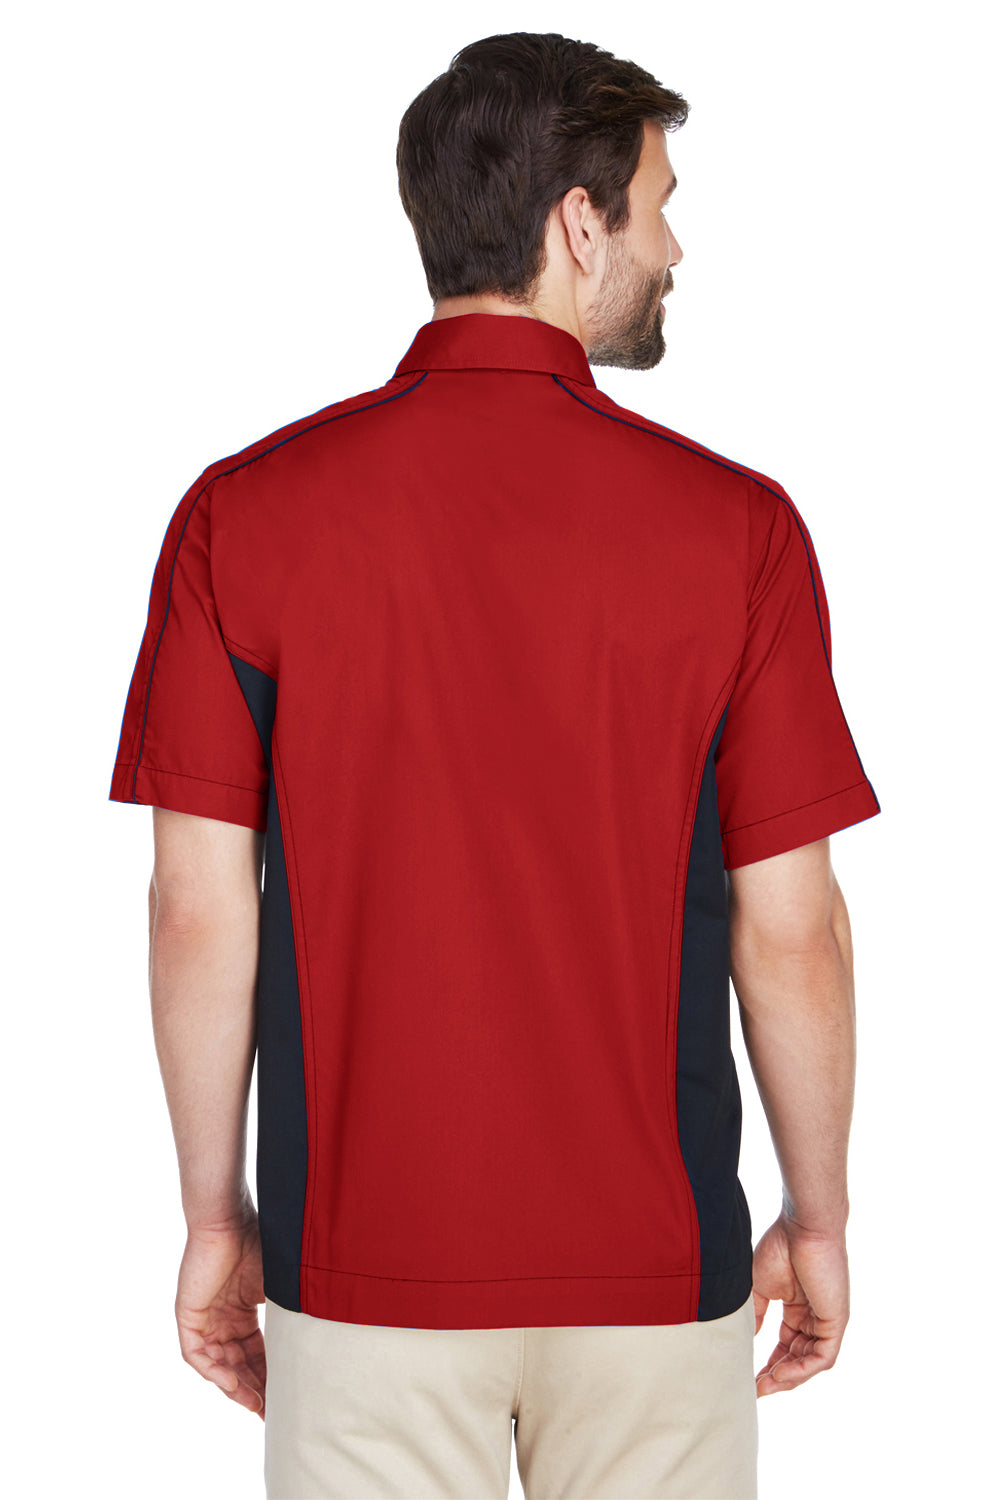 North End 87042 Mens Fuse Short Sleeve Button Down Shirt w/ Pocket Red/Black Back